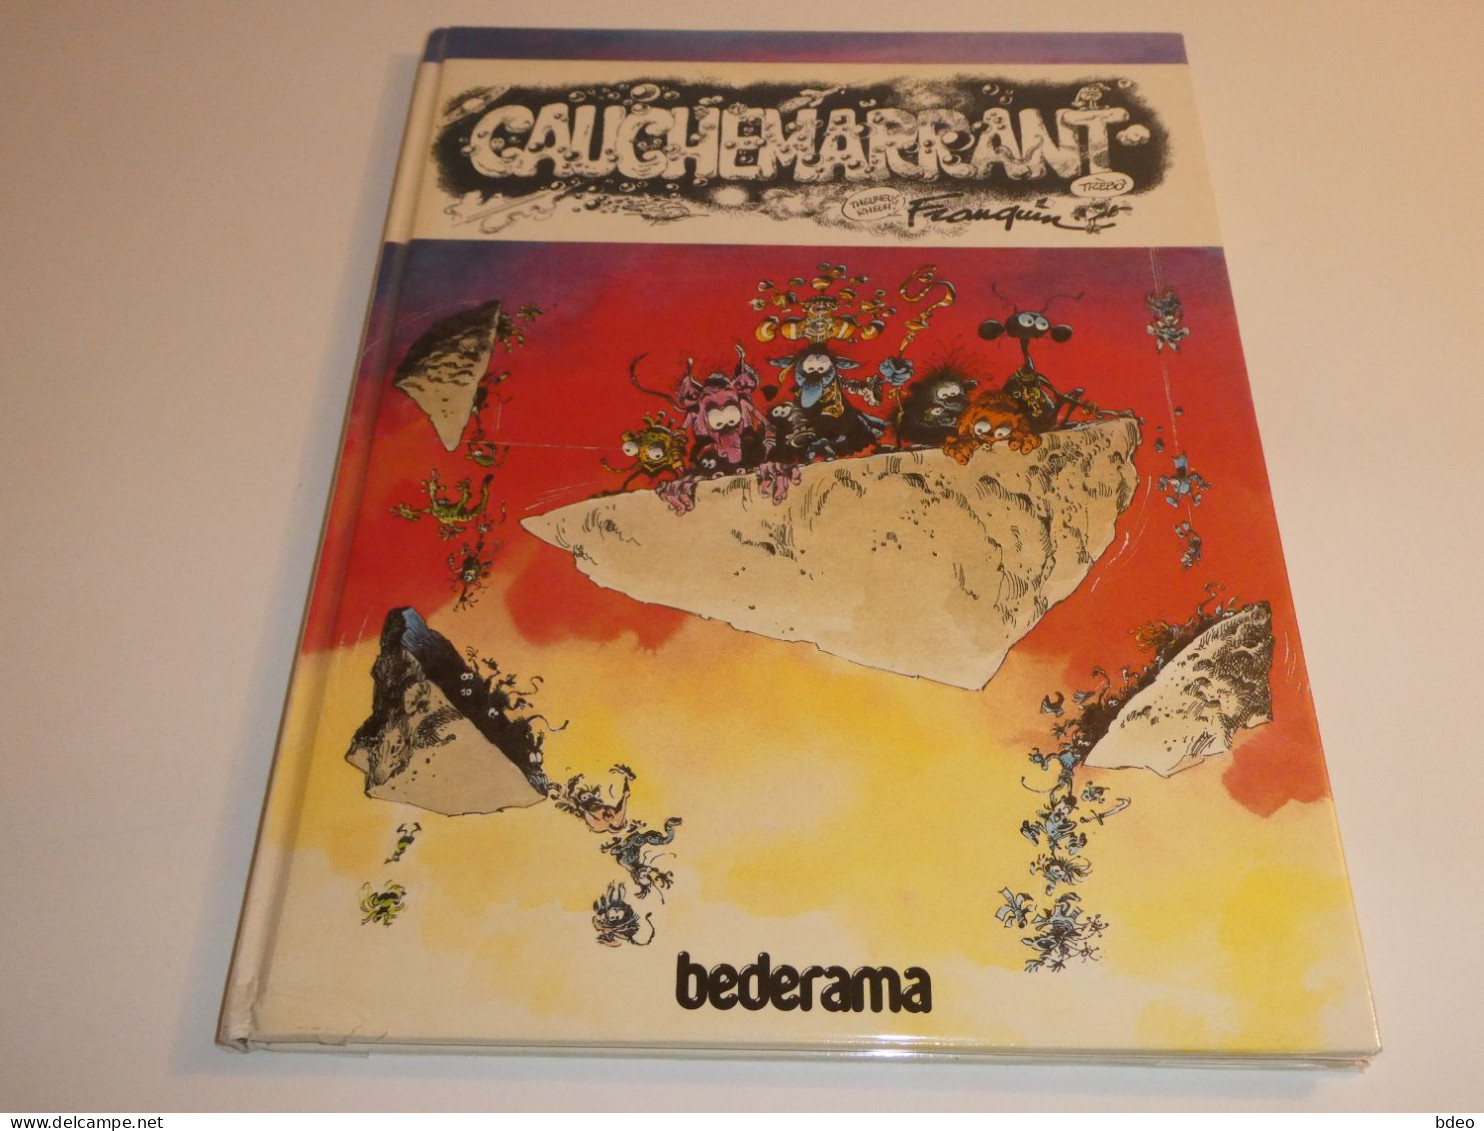 CAUCHEMARRANT / FRANQUIN / BE - Editions Originales (langue Française)